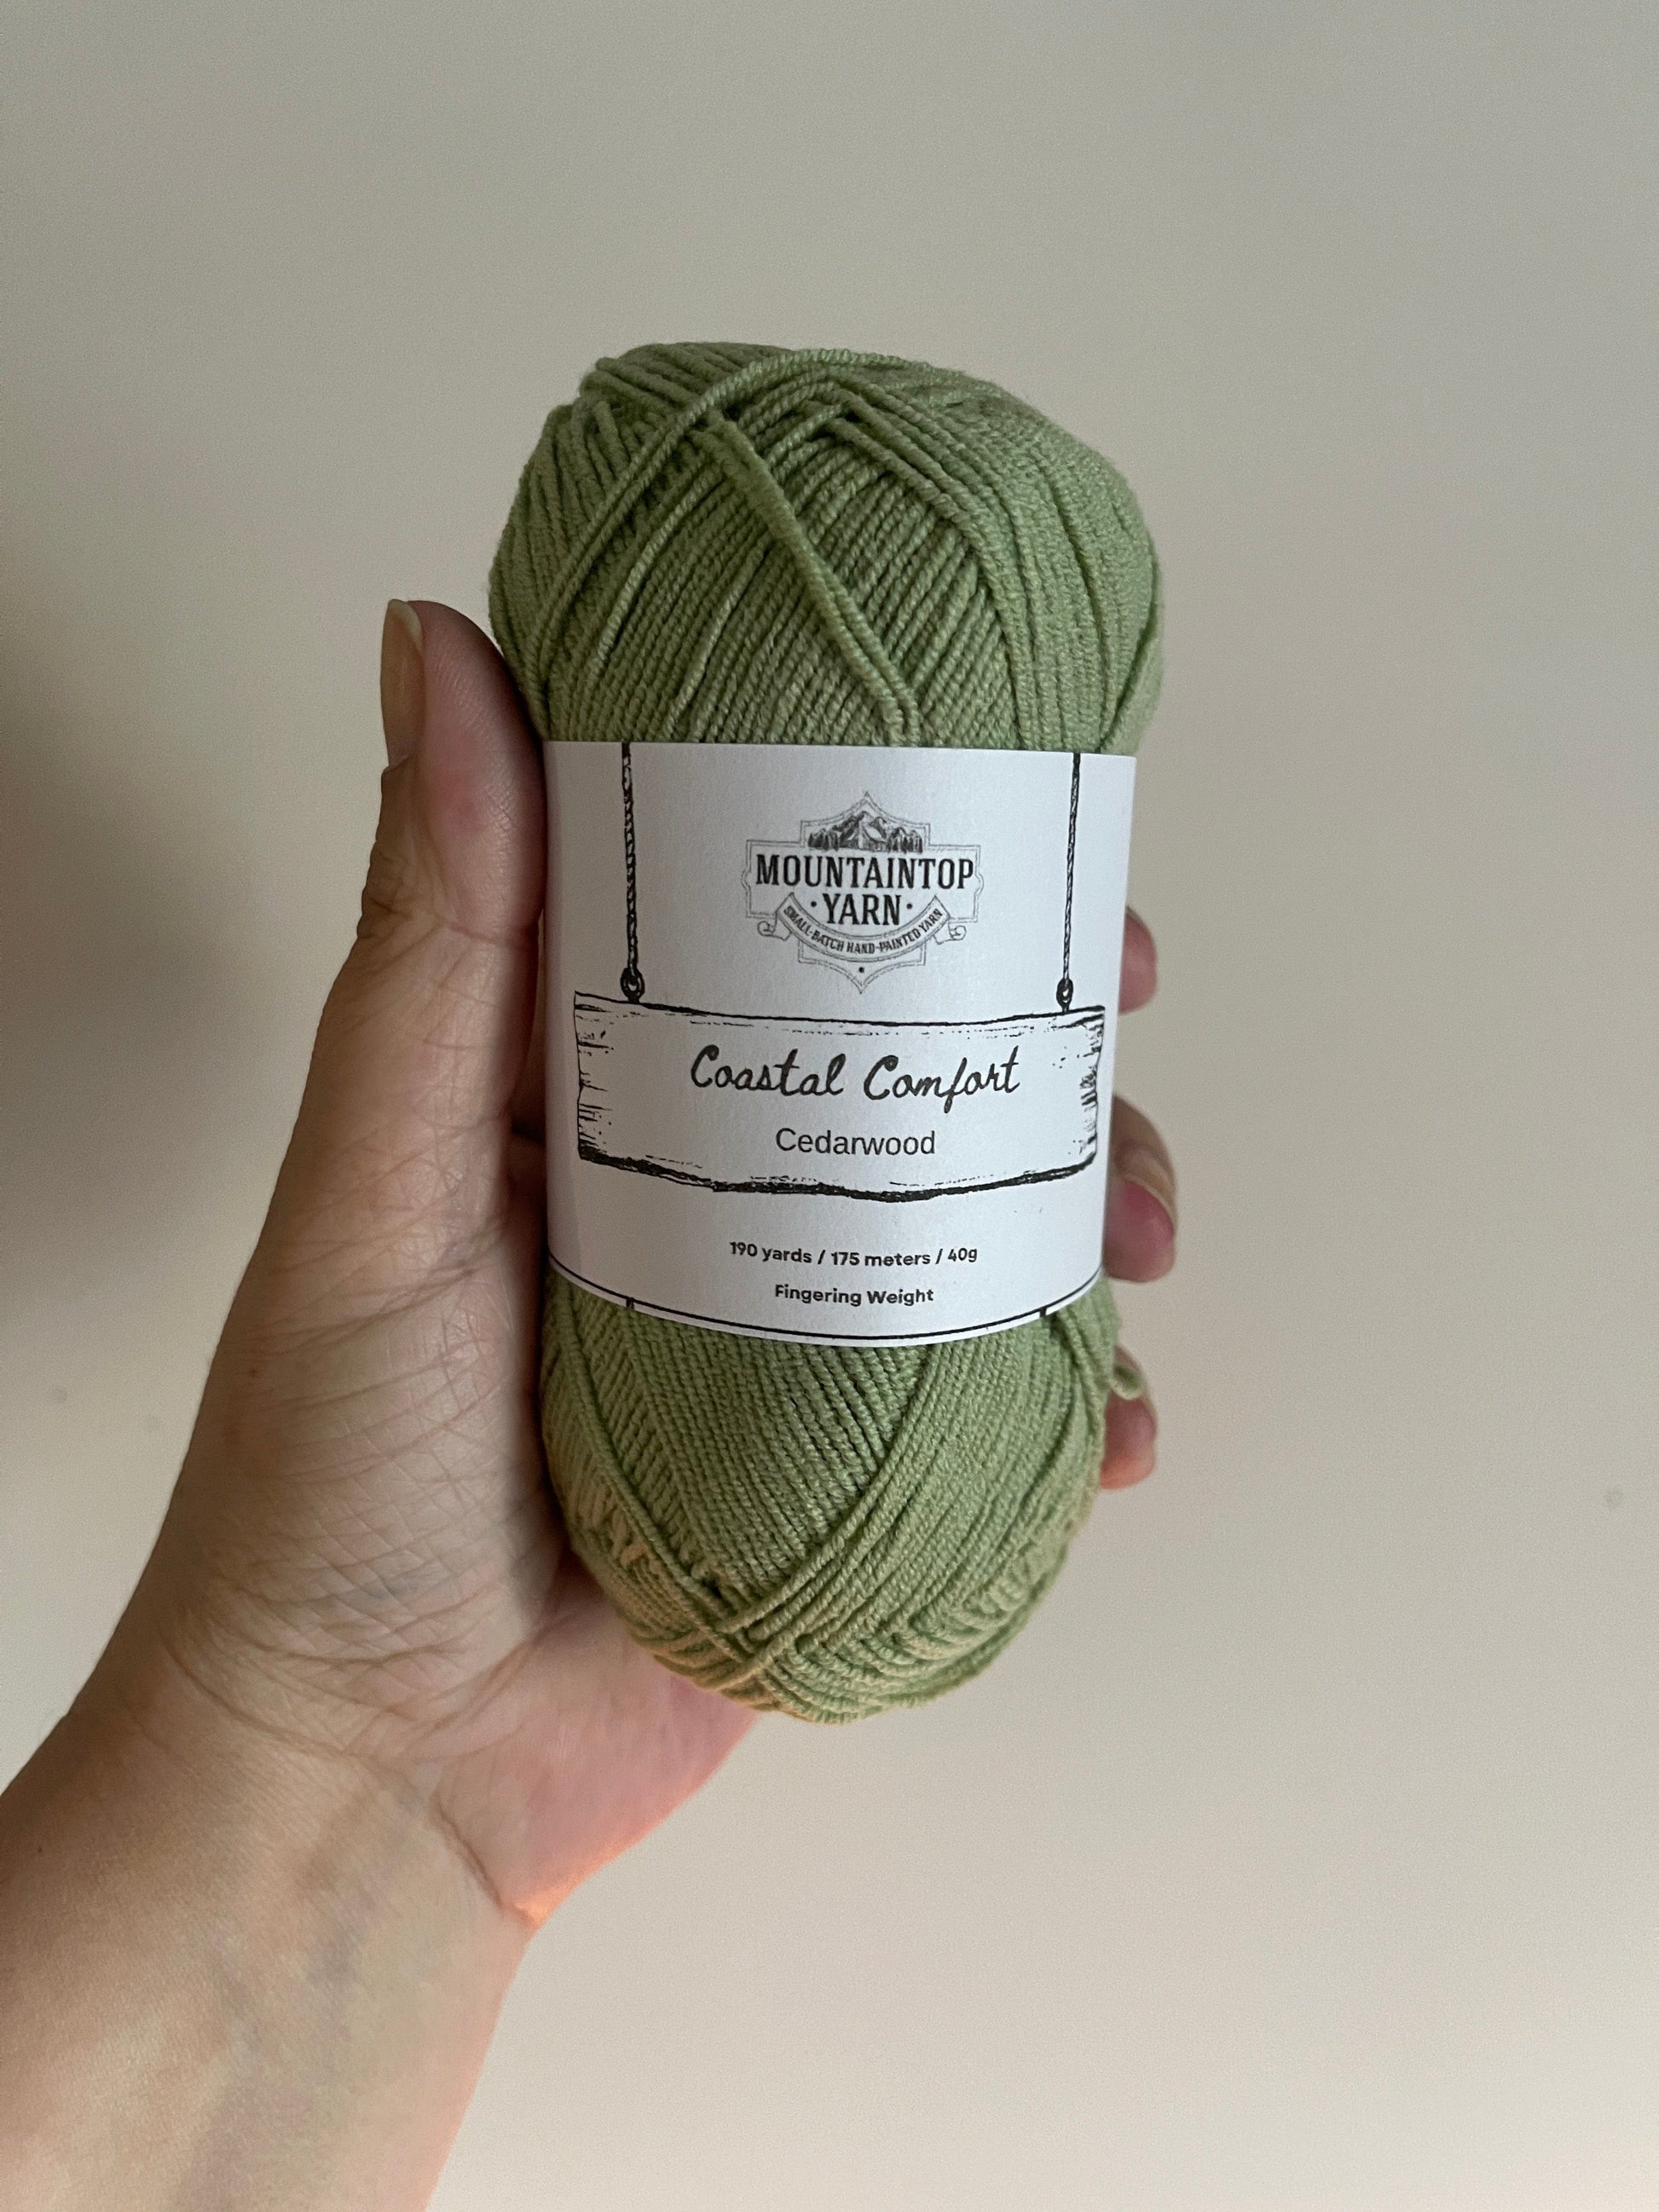 Mountaintop Yarn Cedarwood Coastal Comfort - Cotton and Acrylic Blend Yarn Yarn